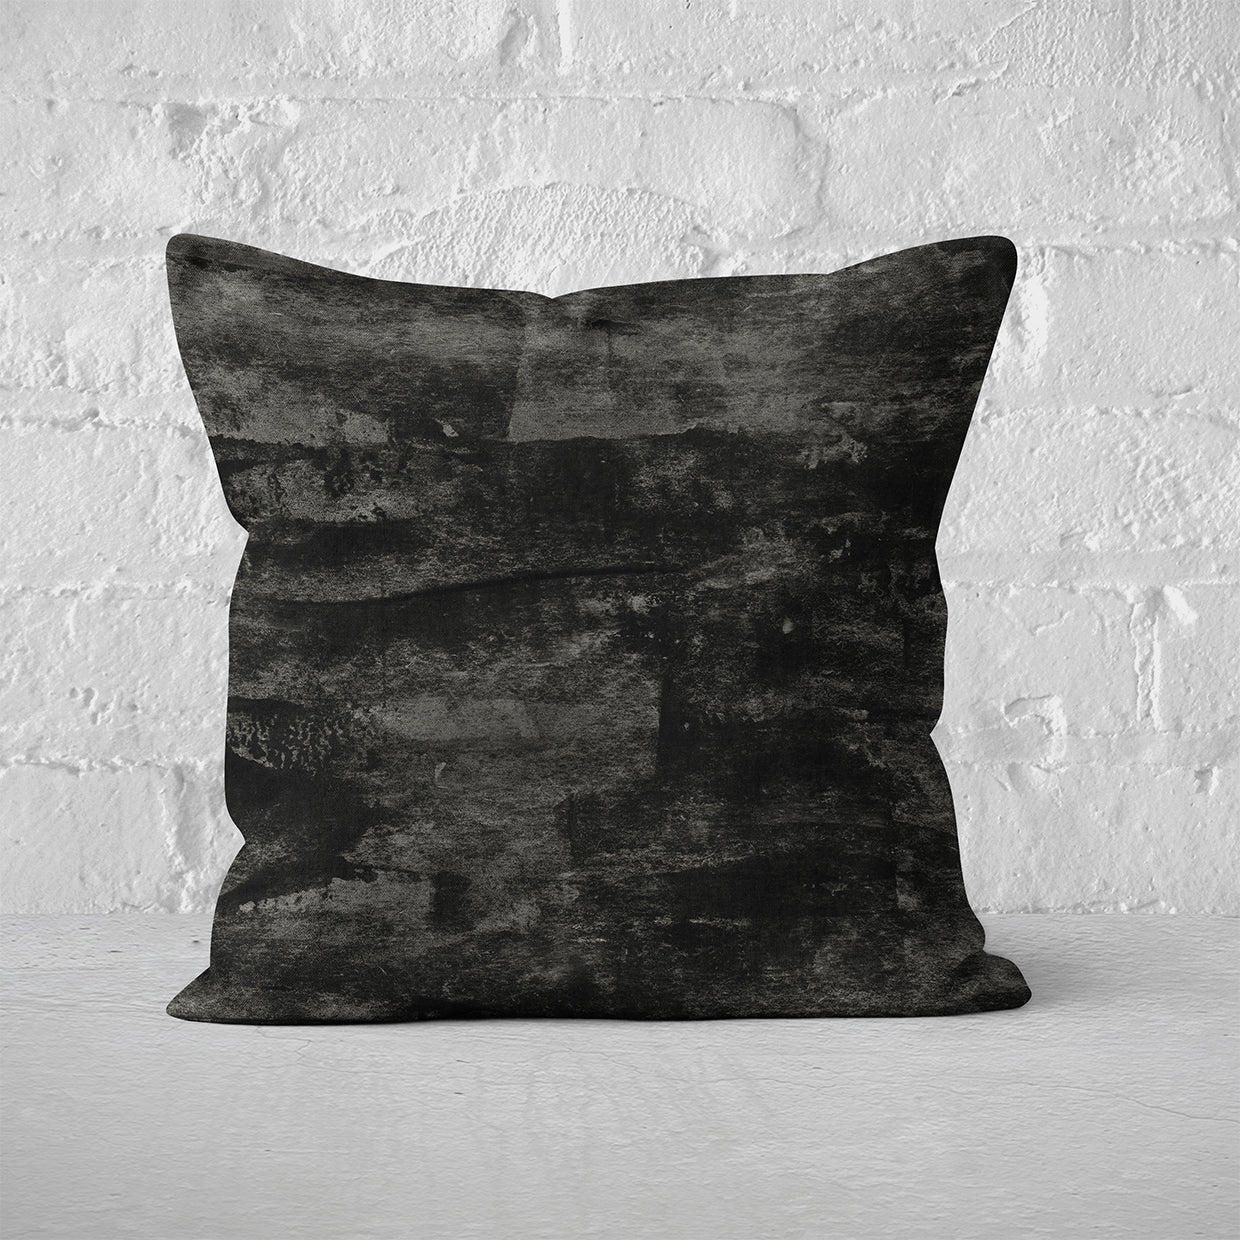 Pillow Cover Art Feature 'Satellite' - Black & Silver Birch - Cotton Twill